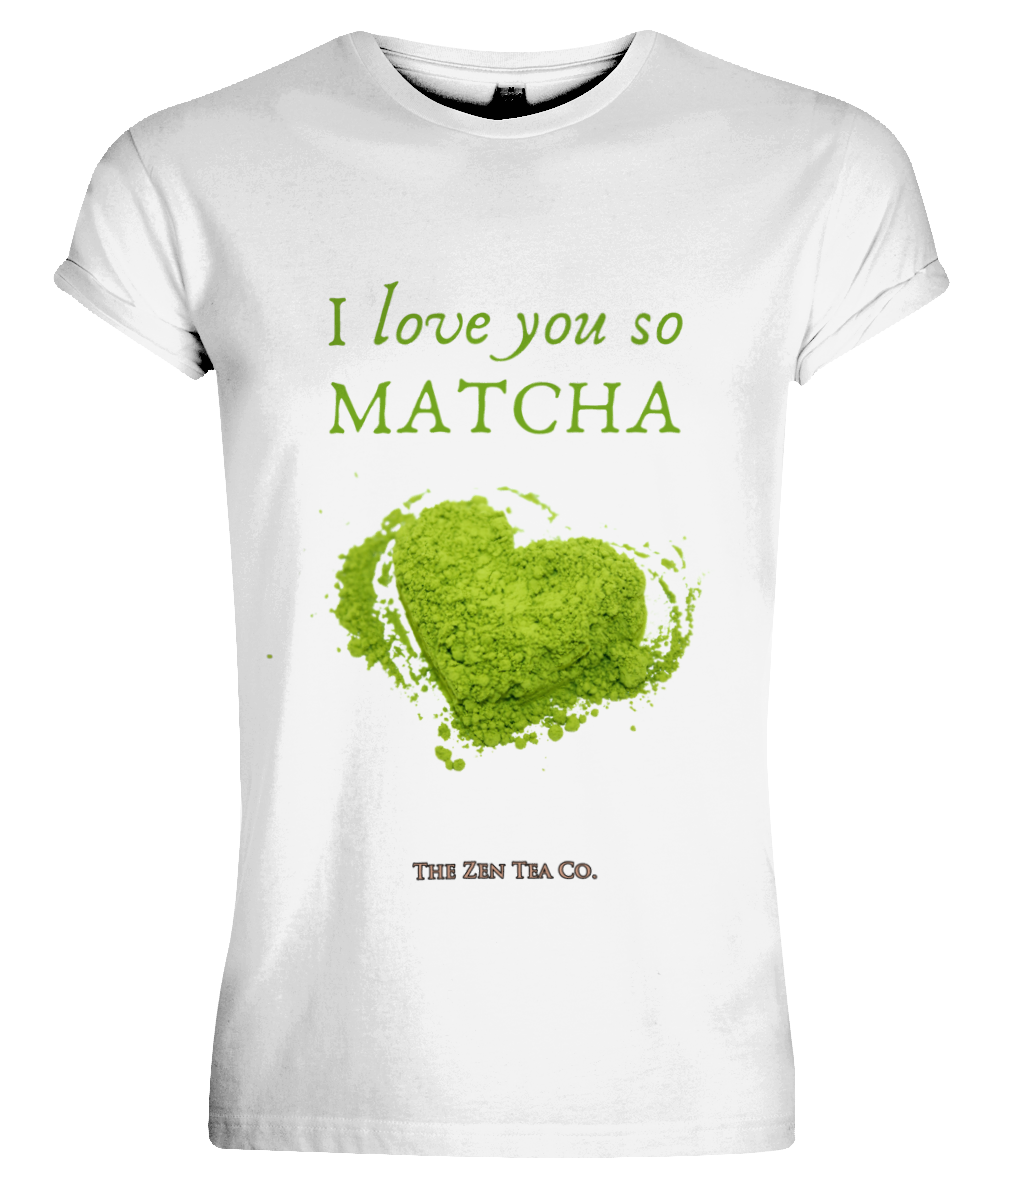 Organic & Vegan Men's Rolled Sleeve White T-Shirt for Matcha Green Tea lovers - I love you so matcha